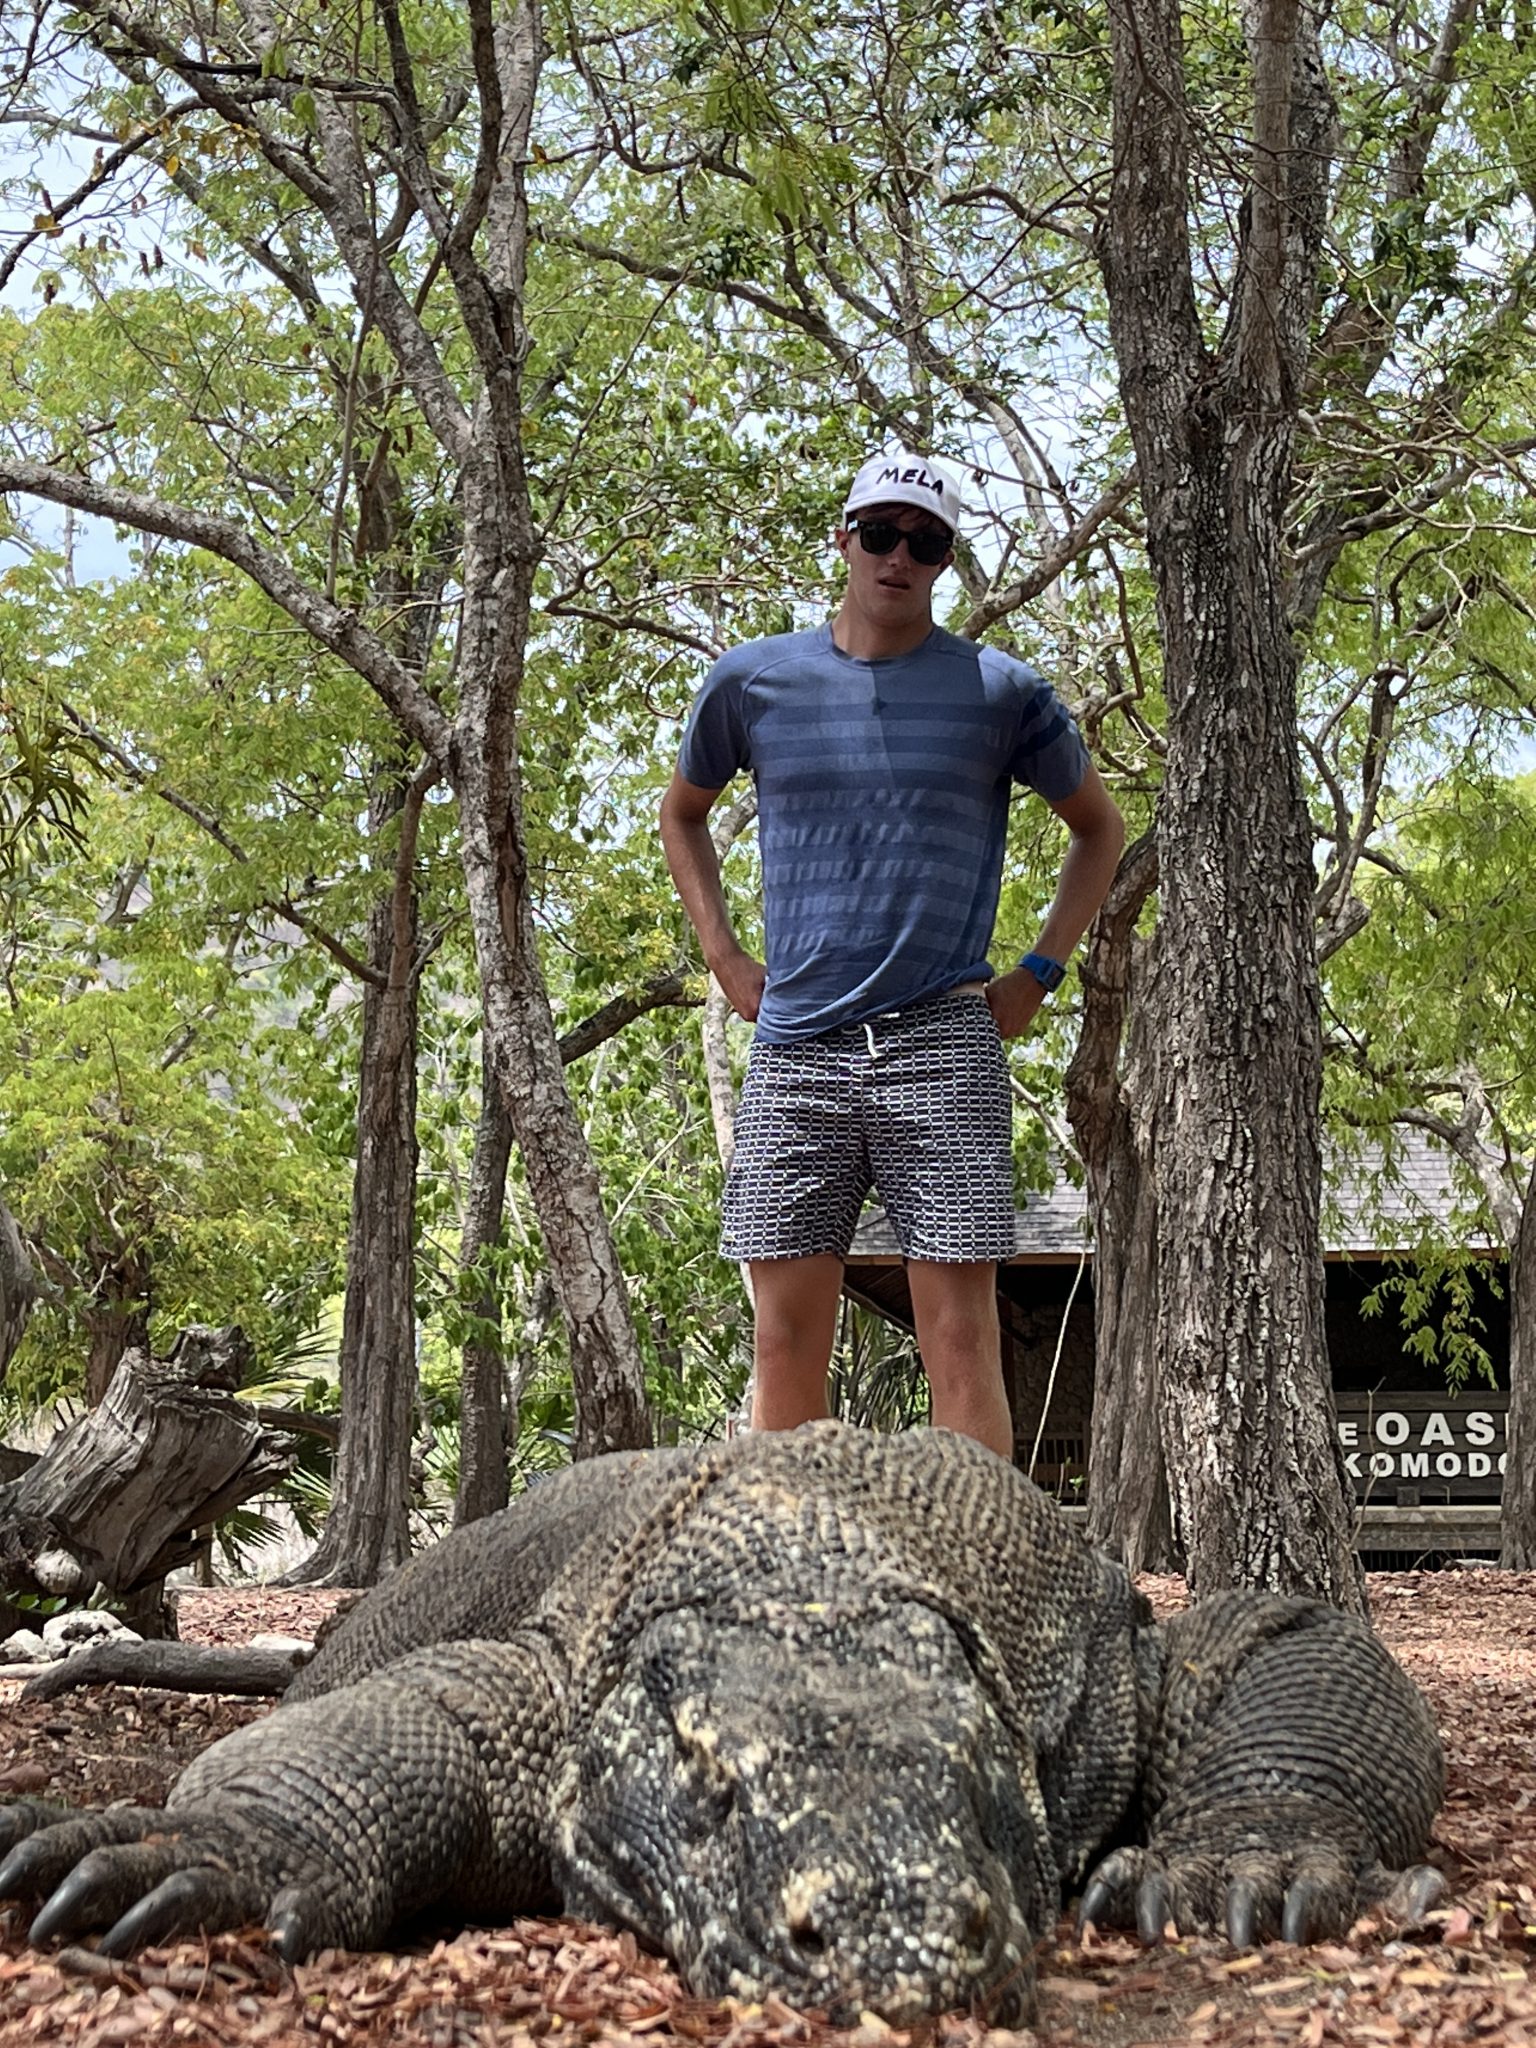 Komodo dragons in their natural habitat